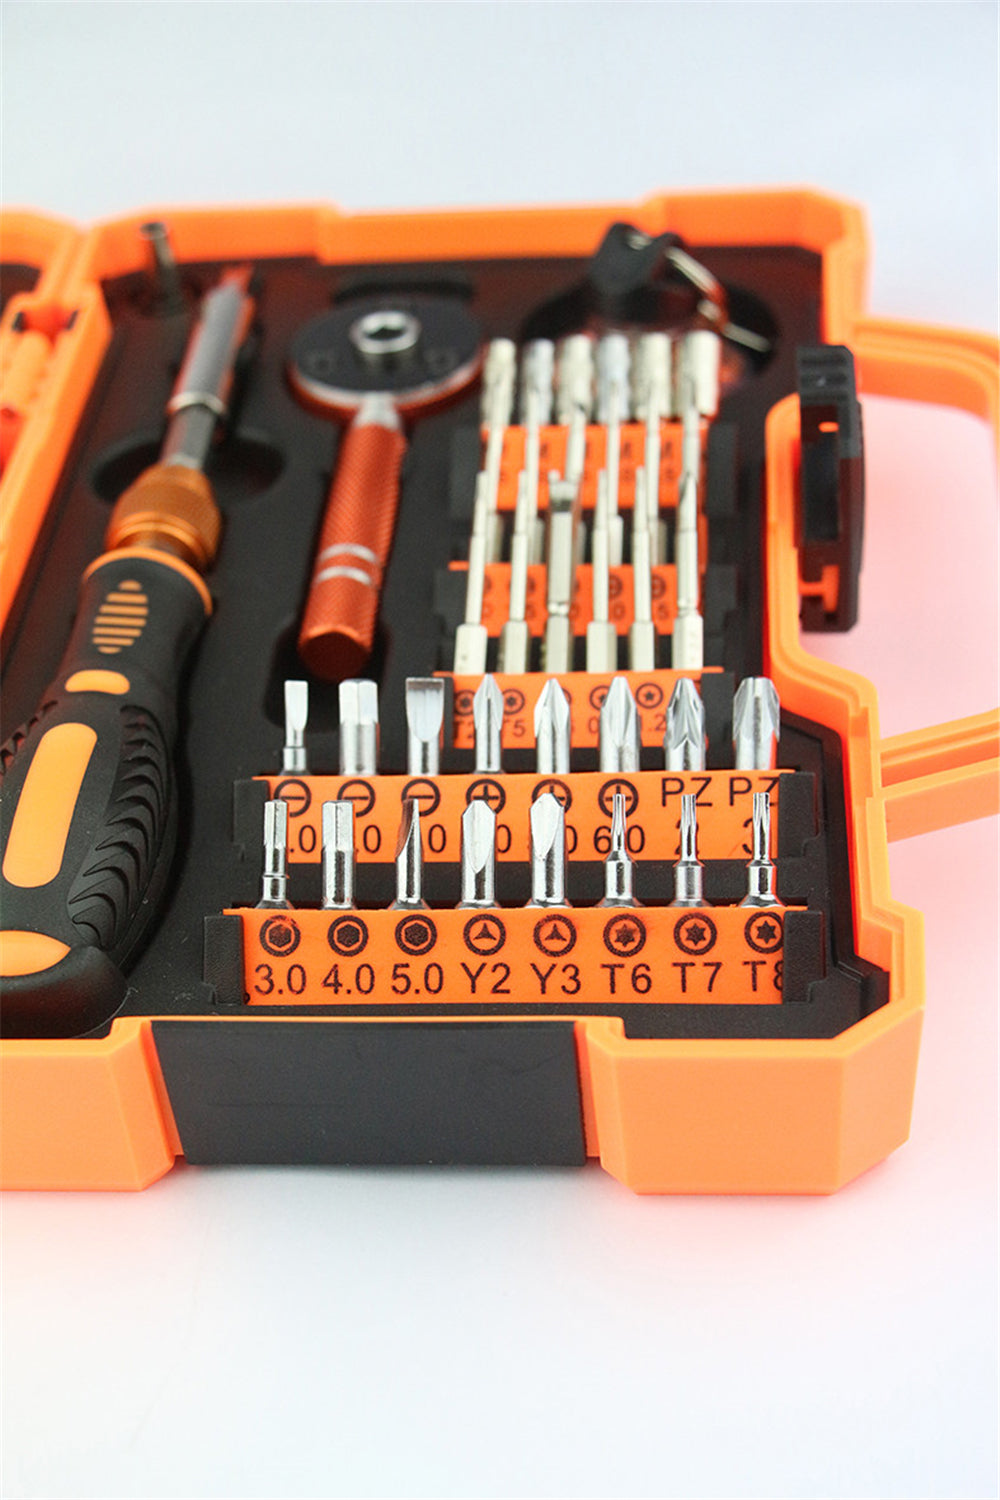 JAKEMY JM-8146 47 in 1 Household DIY maintenance toolkit